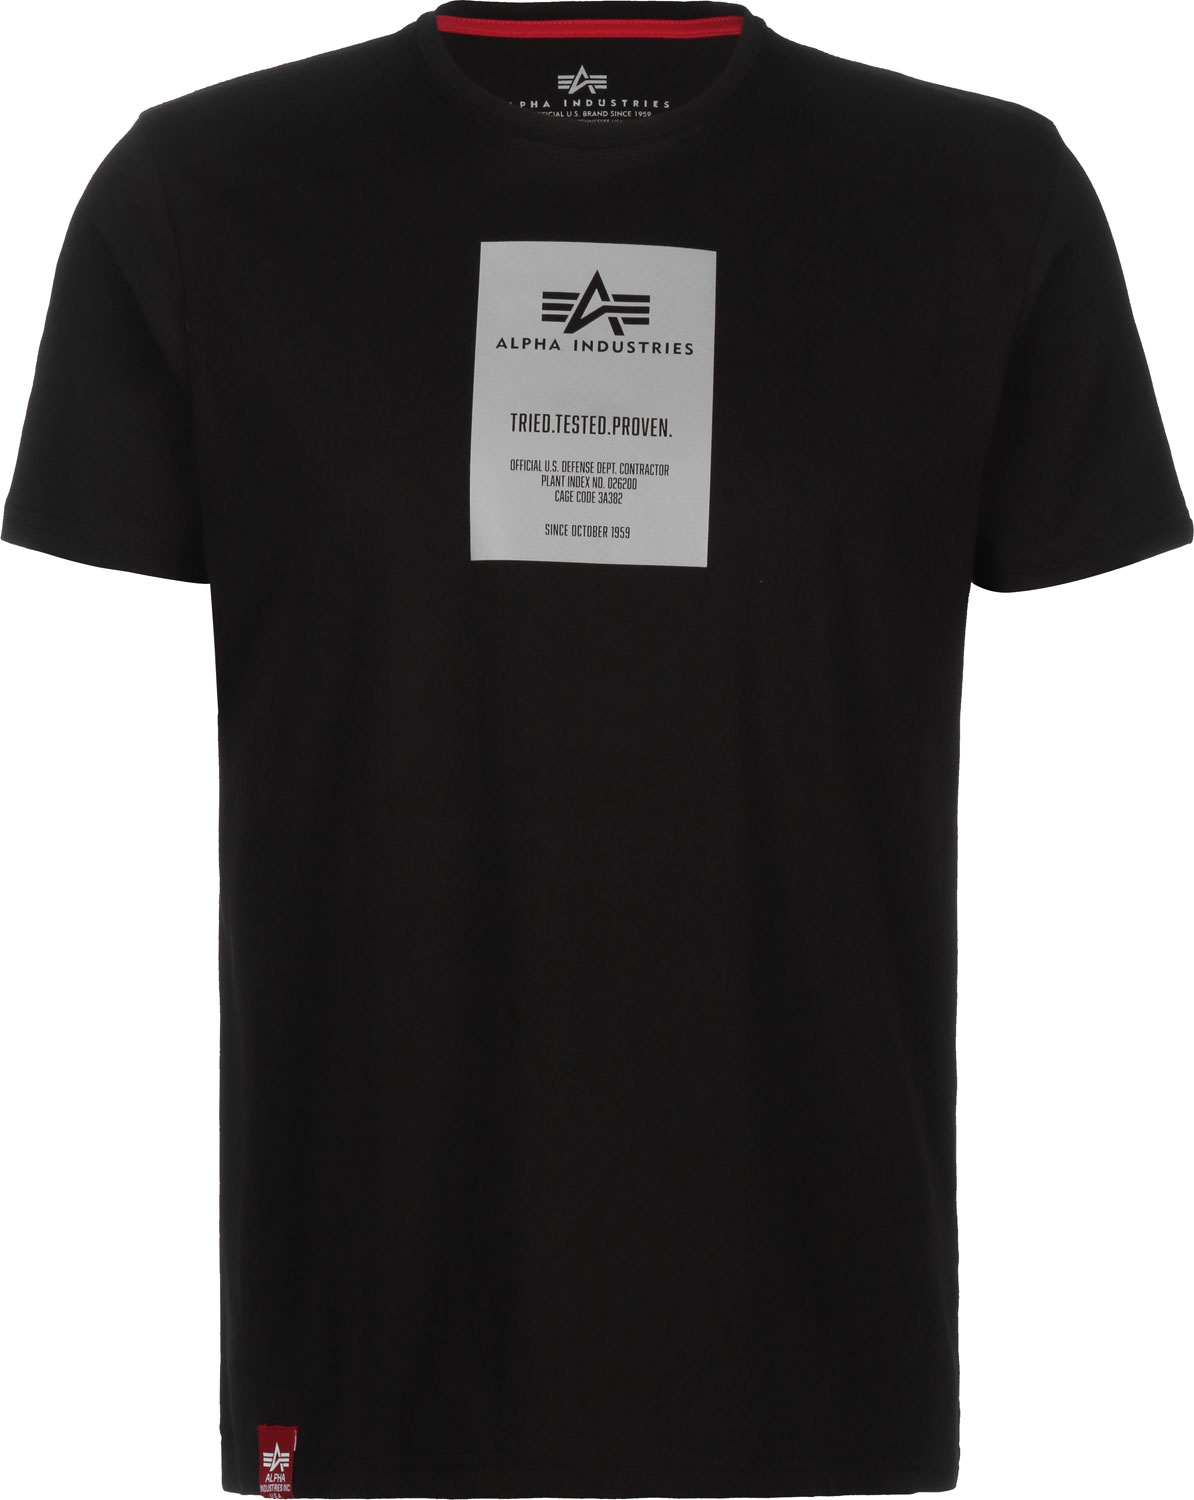 Alpha Industries Reflective Label T-Shirt Black The (126515/09) 515 - 